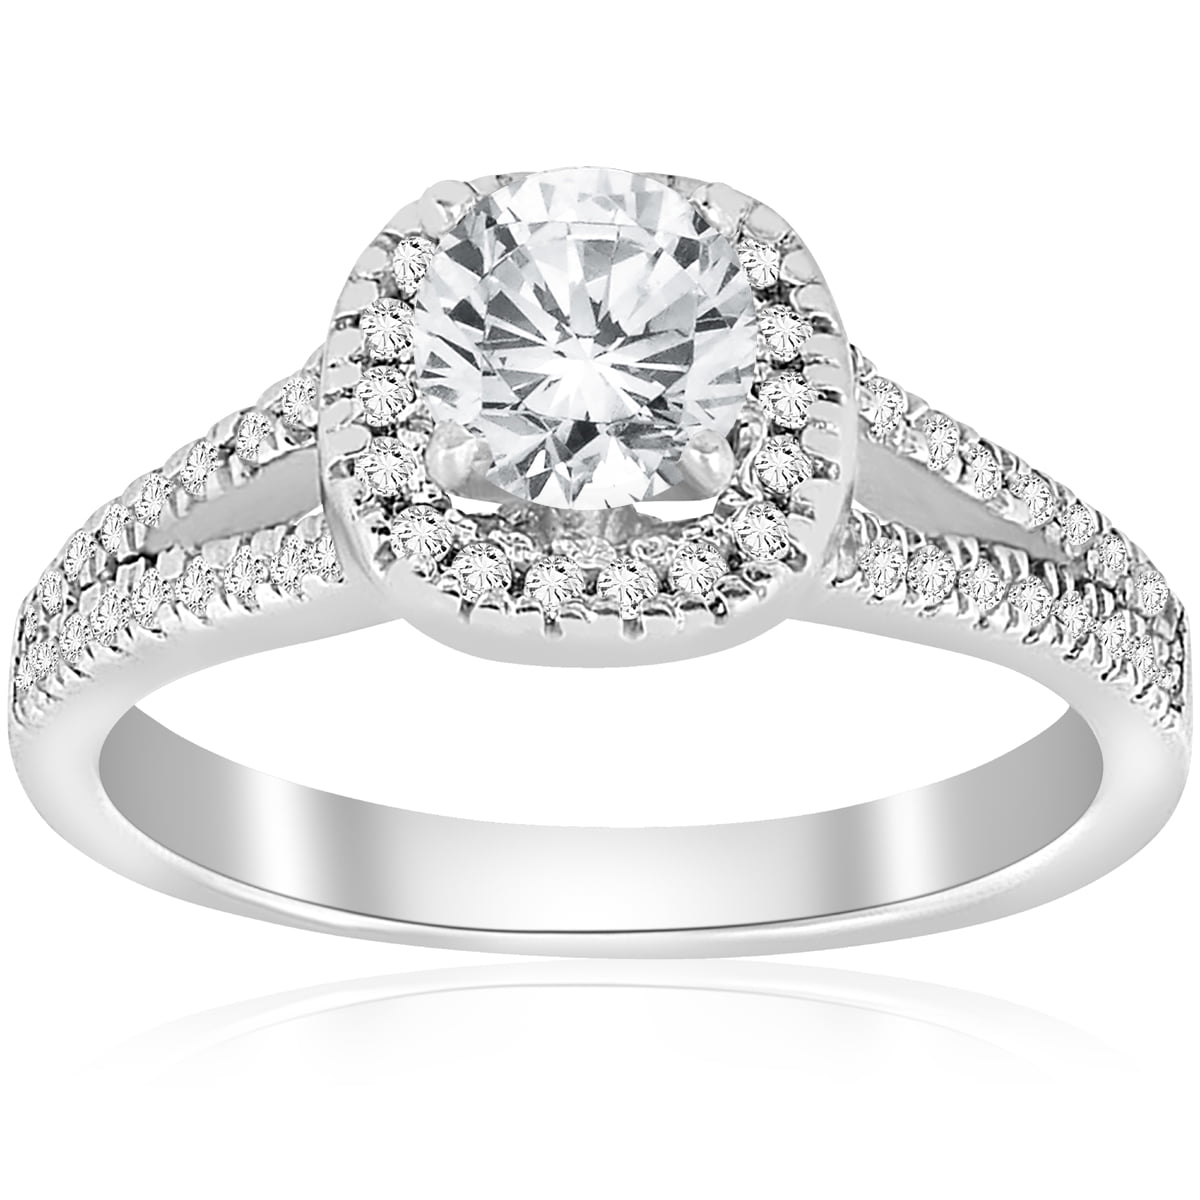 Details about   Art Deco 1.30Ct Round Diamond Antique Vintage Engagement Ring Solid 925 Silver 